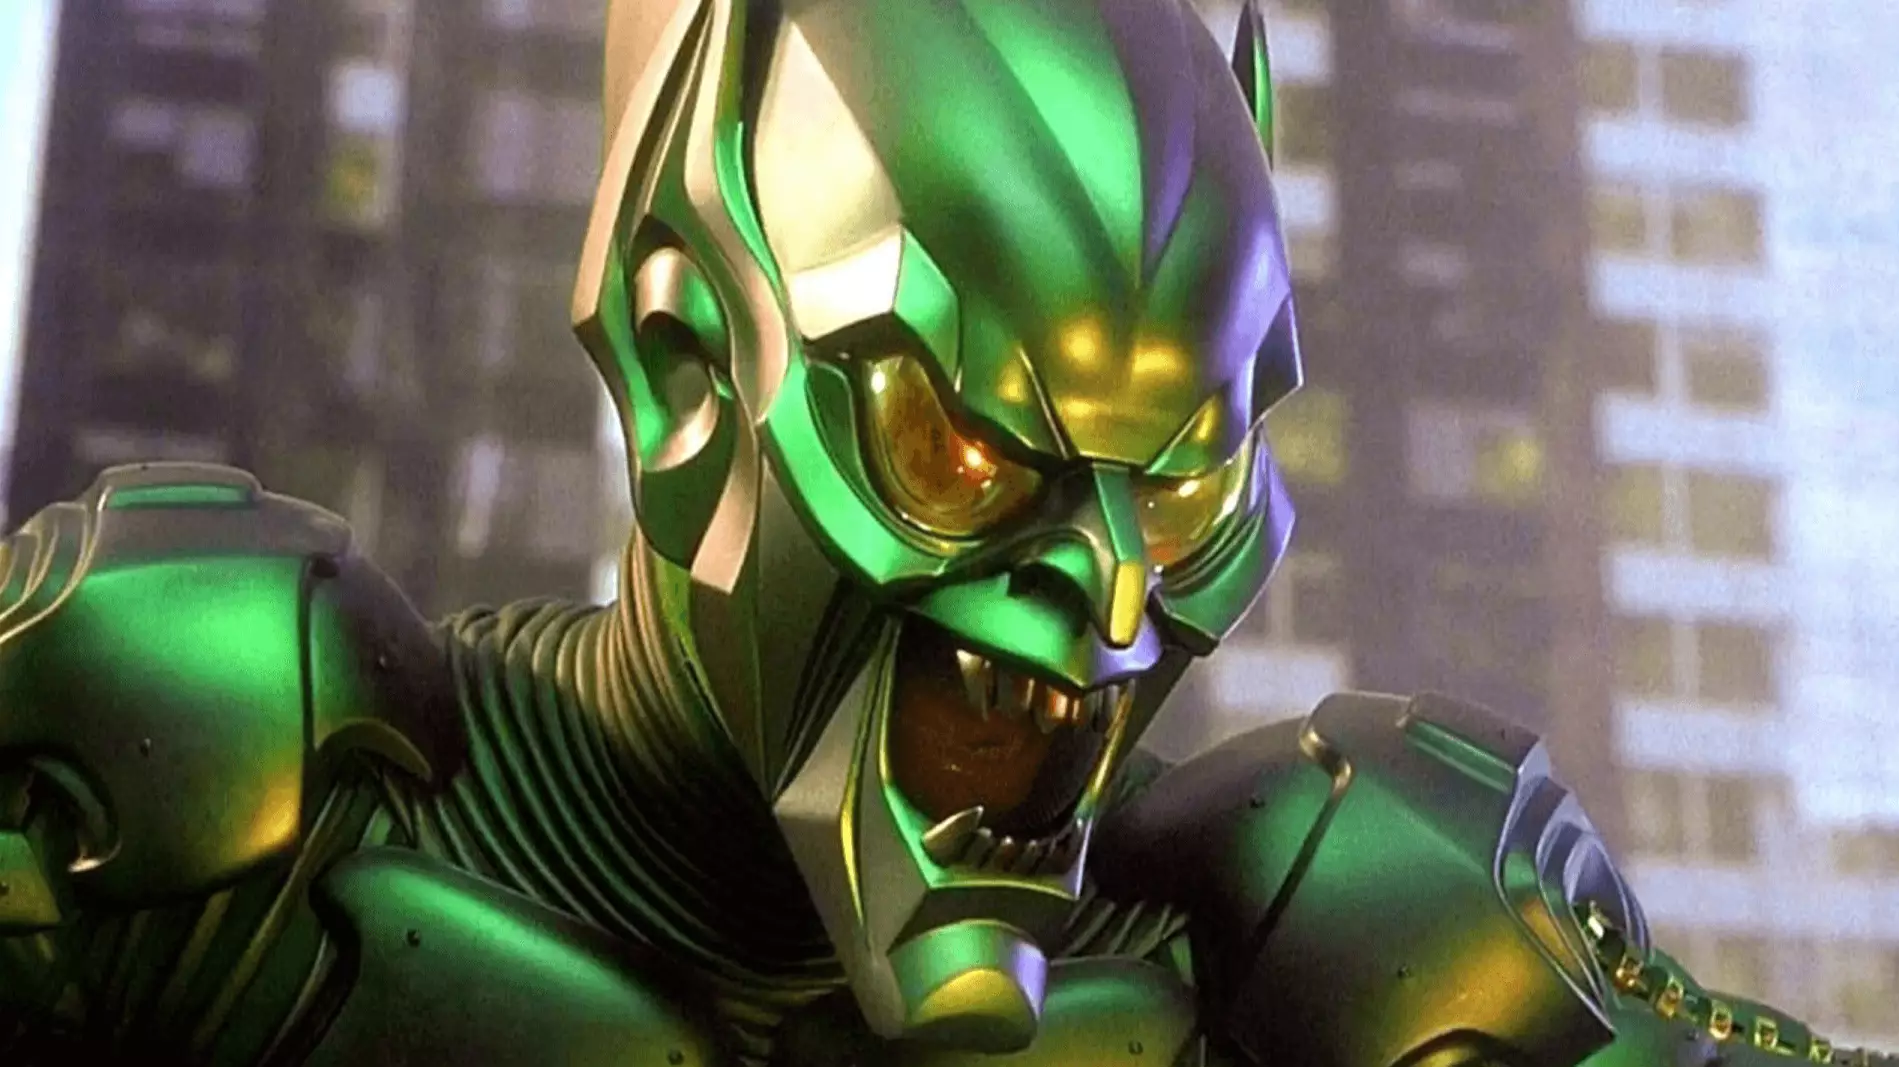 Willem Dafoe In Talks To Play Green Goblin In Spider-Man 3